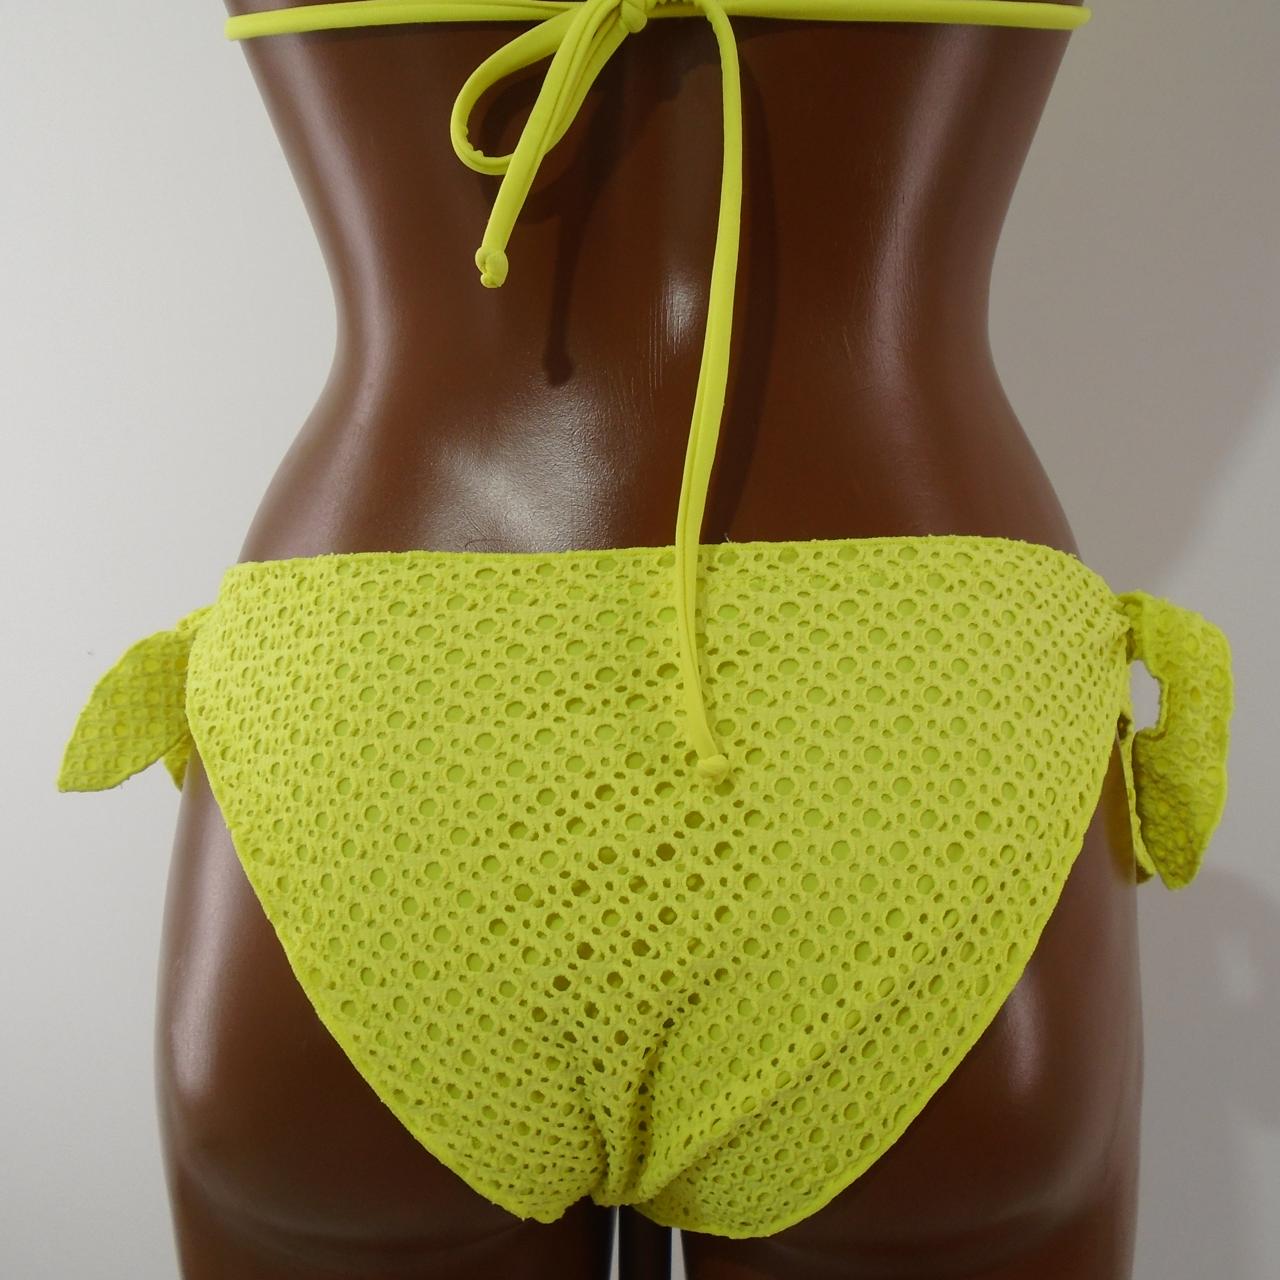 Women's Swimsuit OVS. Yellow. M. Used. Good